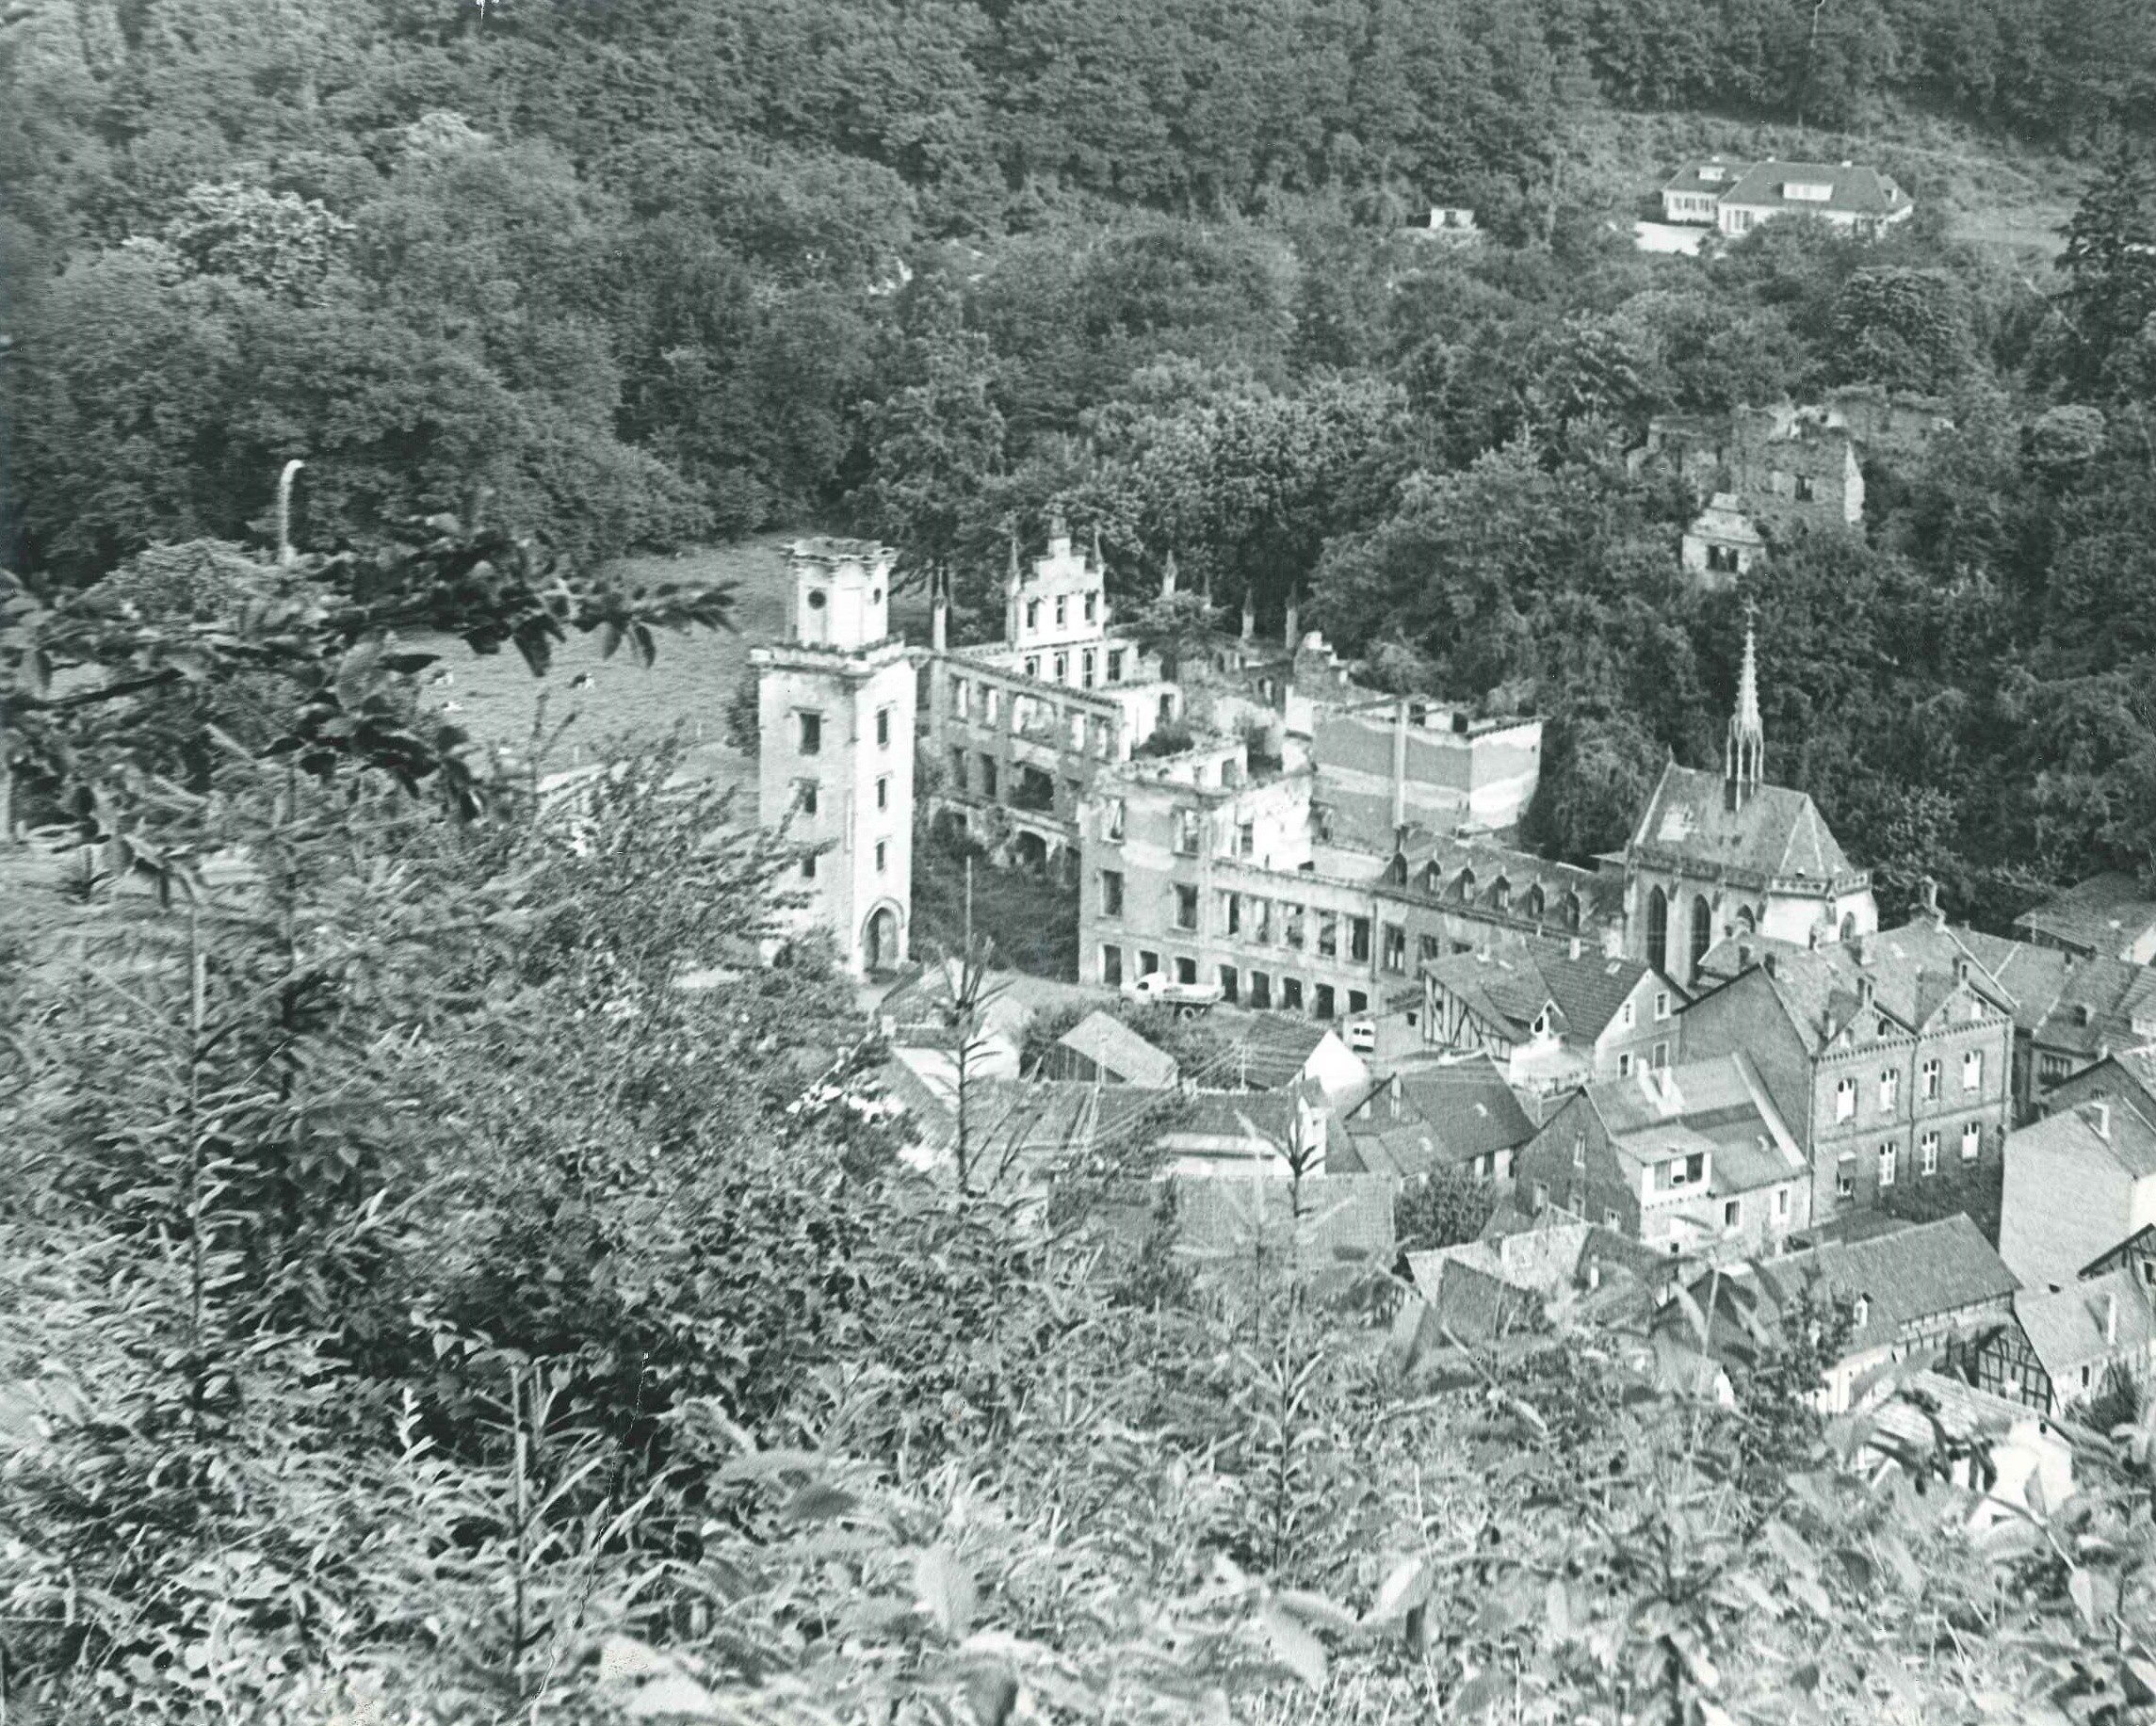 Luftaufnahme, Ruine von Schloß Sayn, 1955 (REM CC BY-NC-SA)